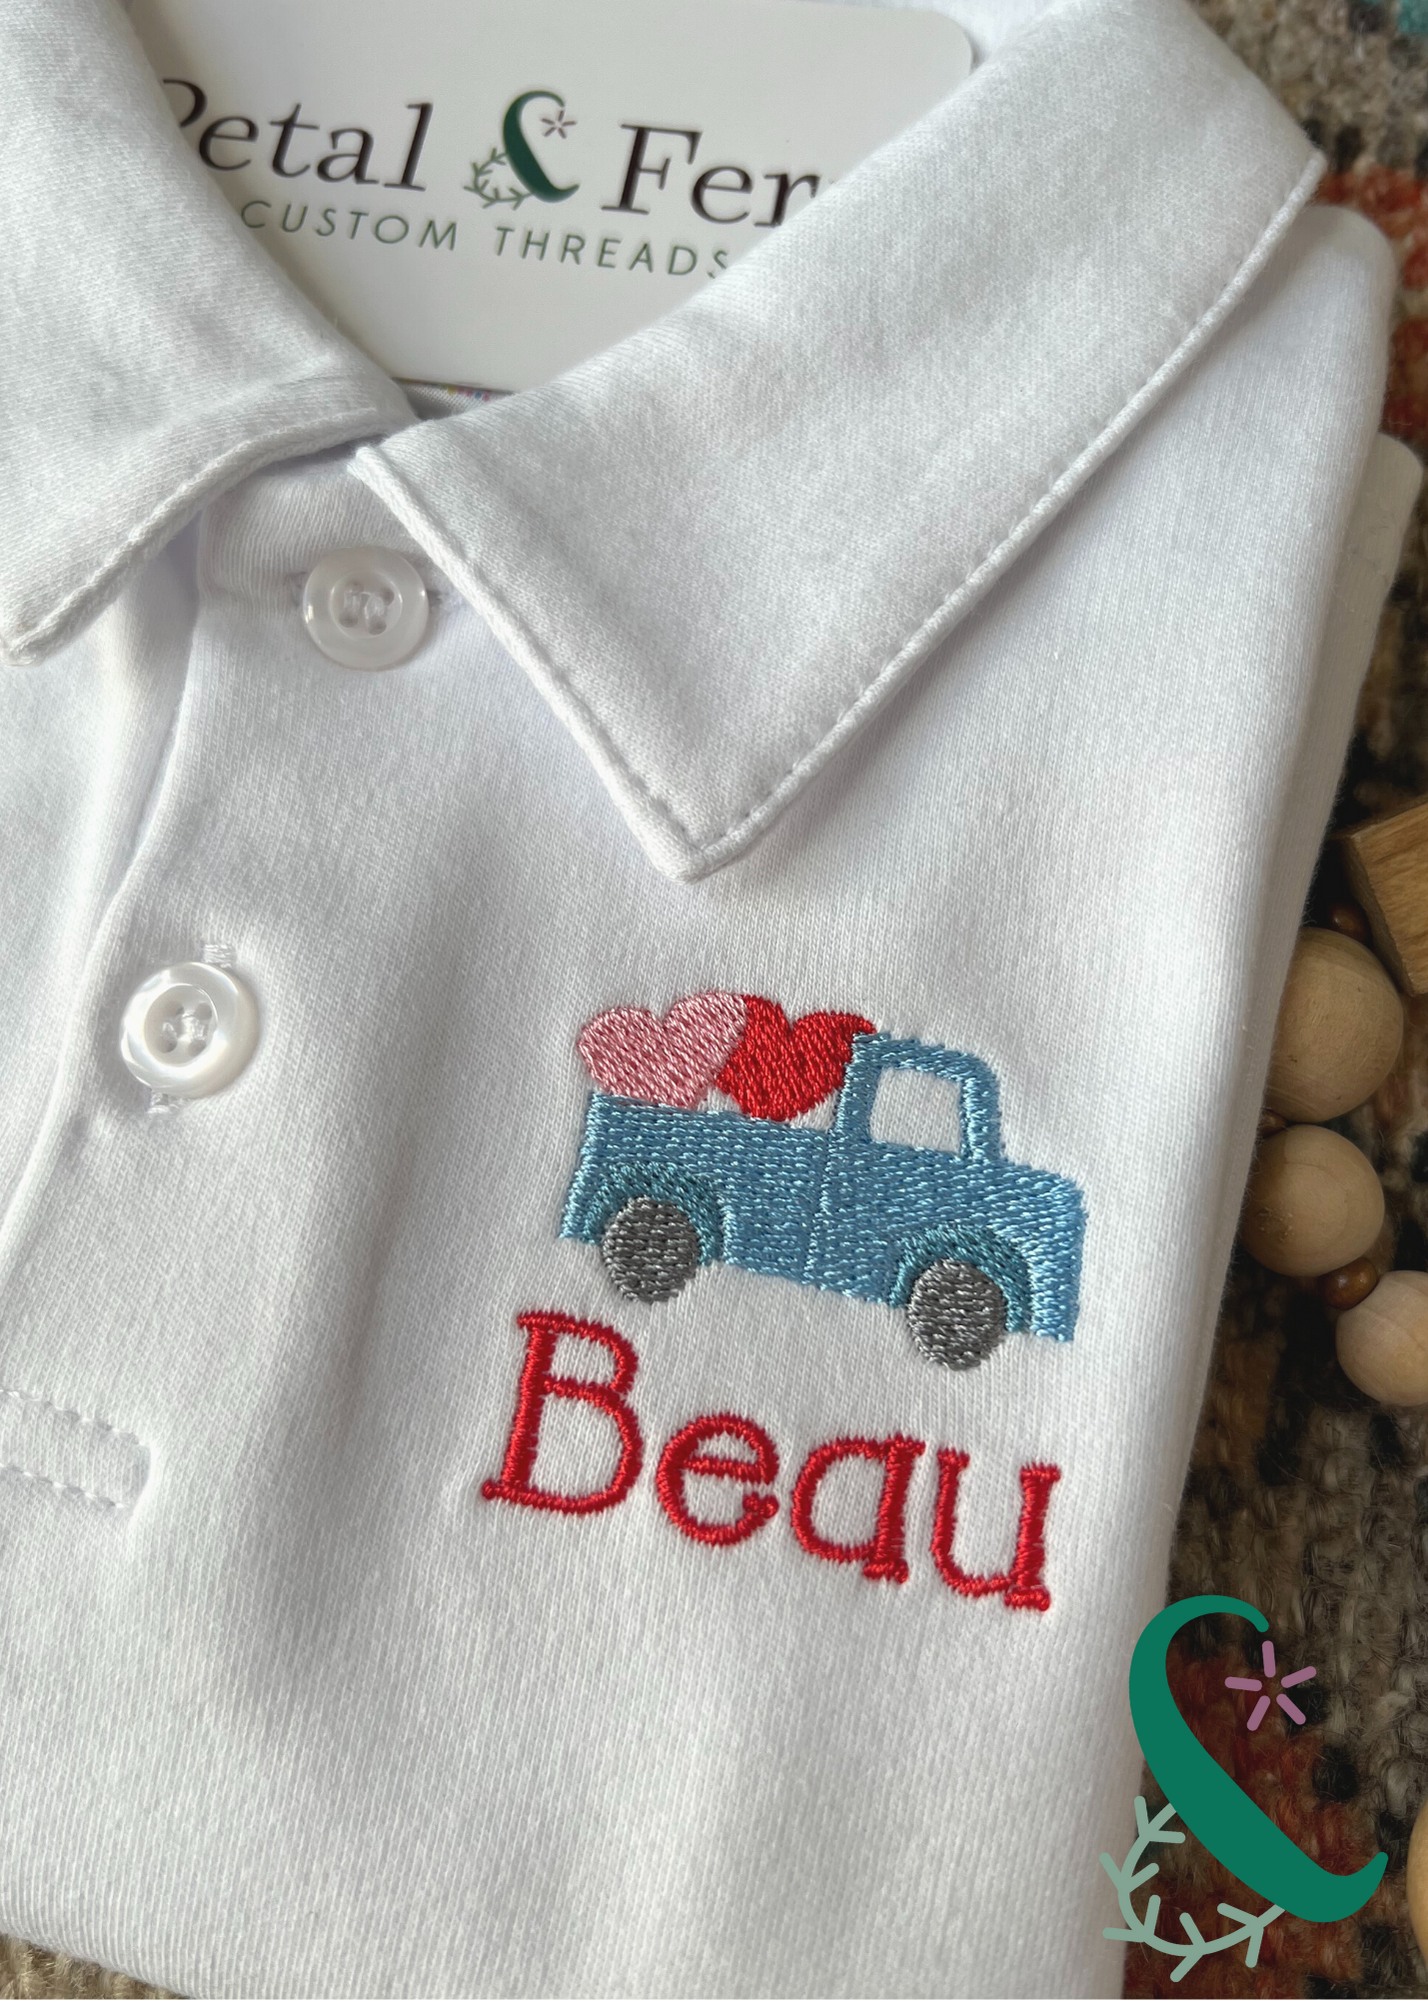 Collared Polo Shirt with Left Chest Monogram (Long Sleeve or Short Sle –  Petal & Fern Custom Threads